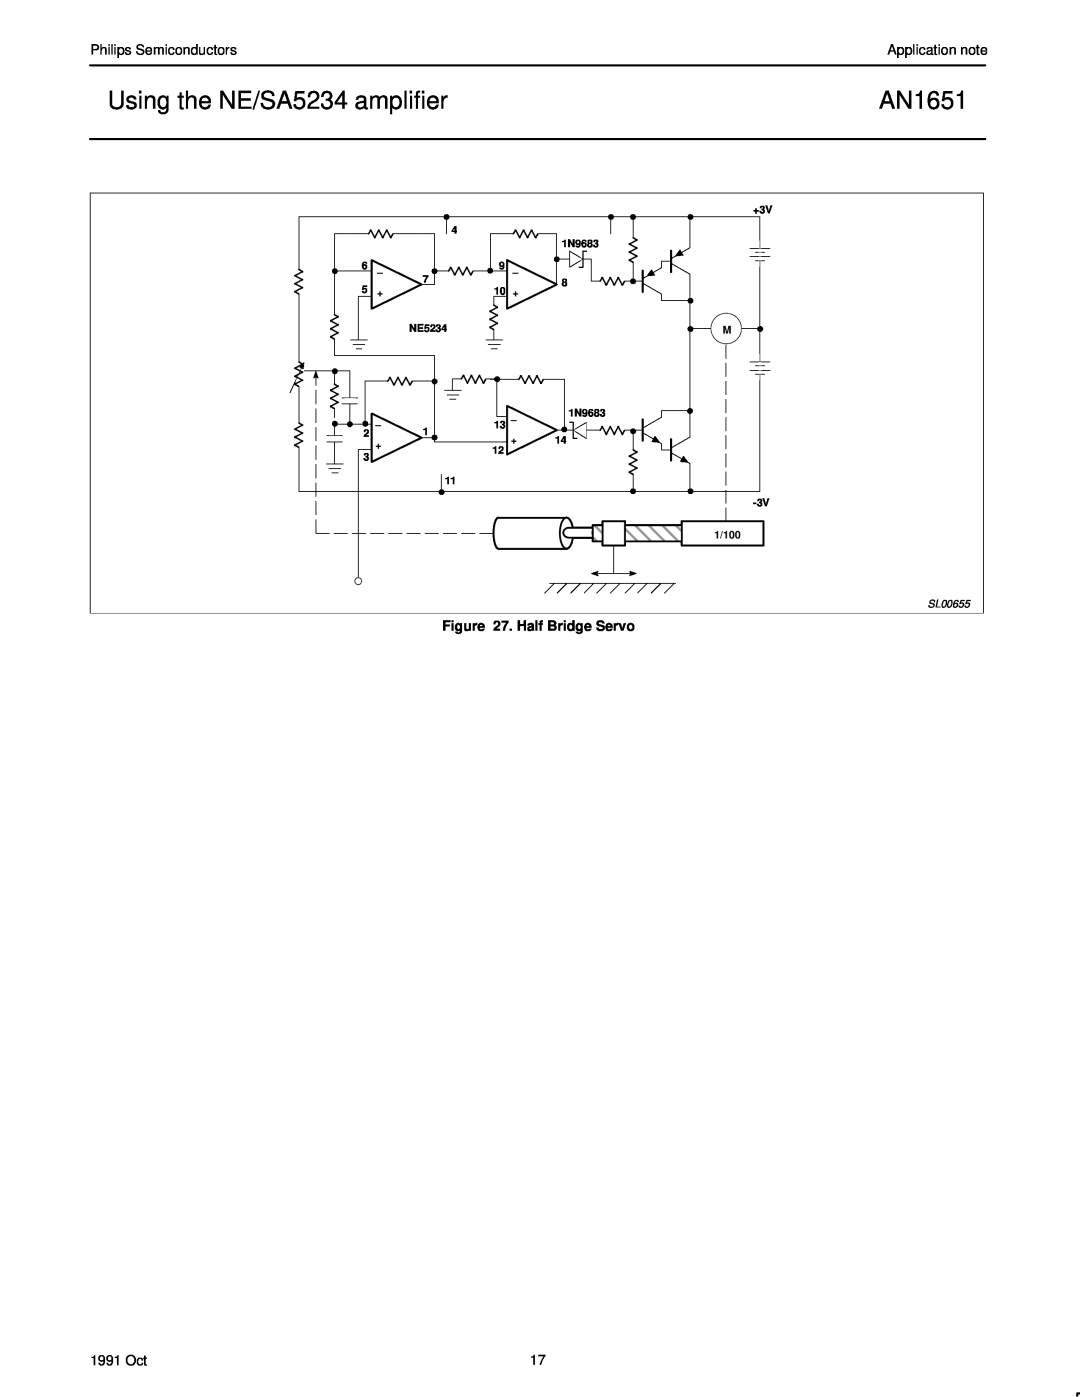 Philips AN1651 manual Half Bridge Servo, Using the NE/SA5234 amplifier, Application note, SL00655 